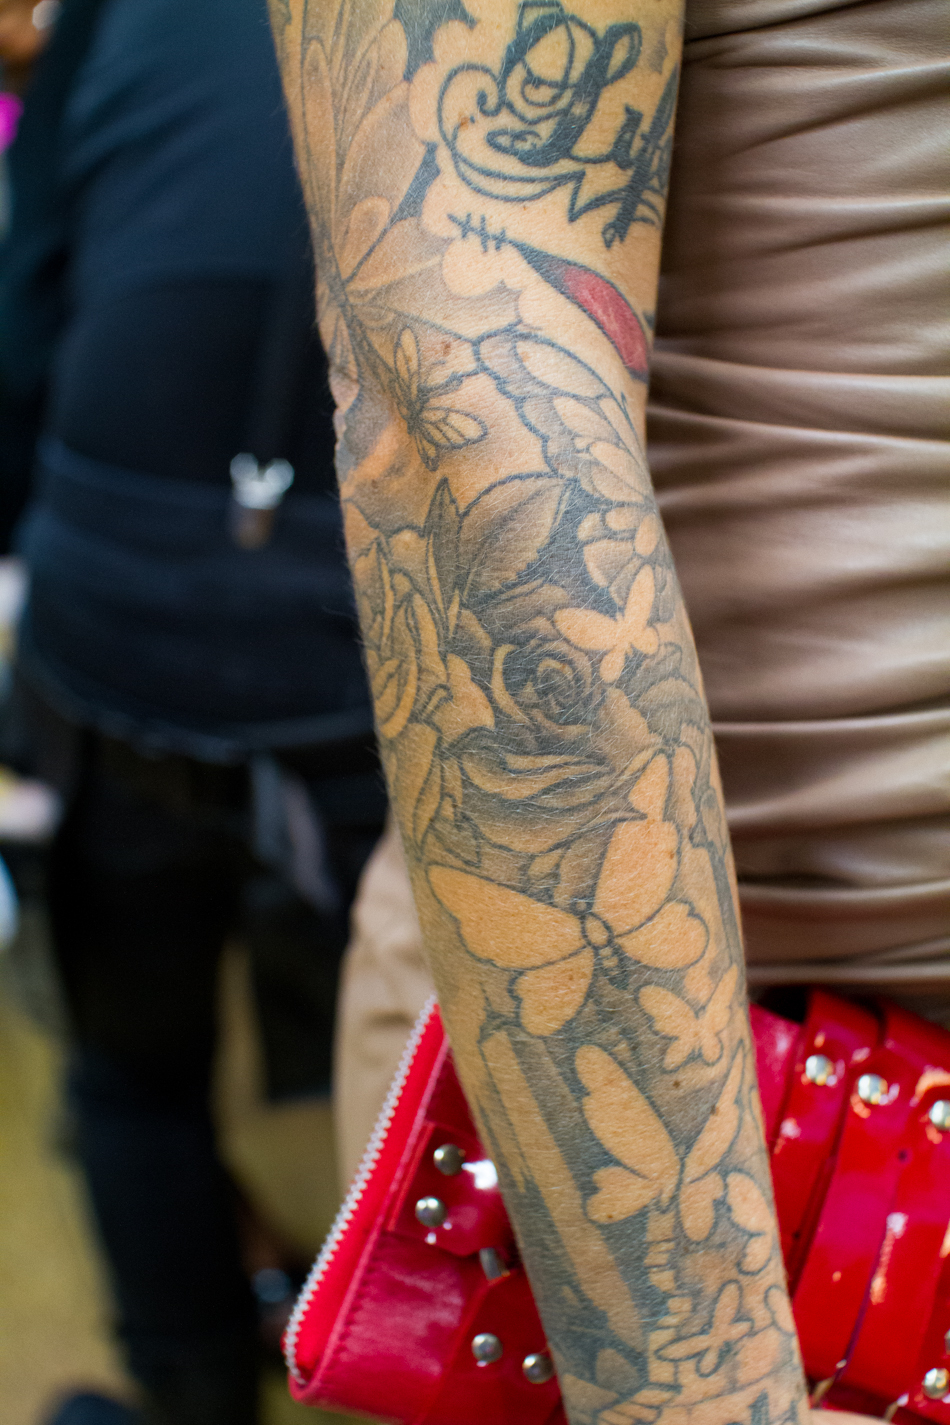 laura satana exxxotic tattoos collaboration Make Up For Ever